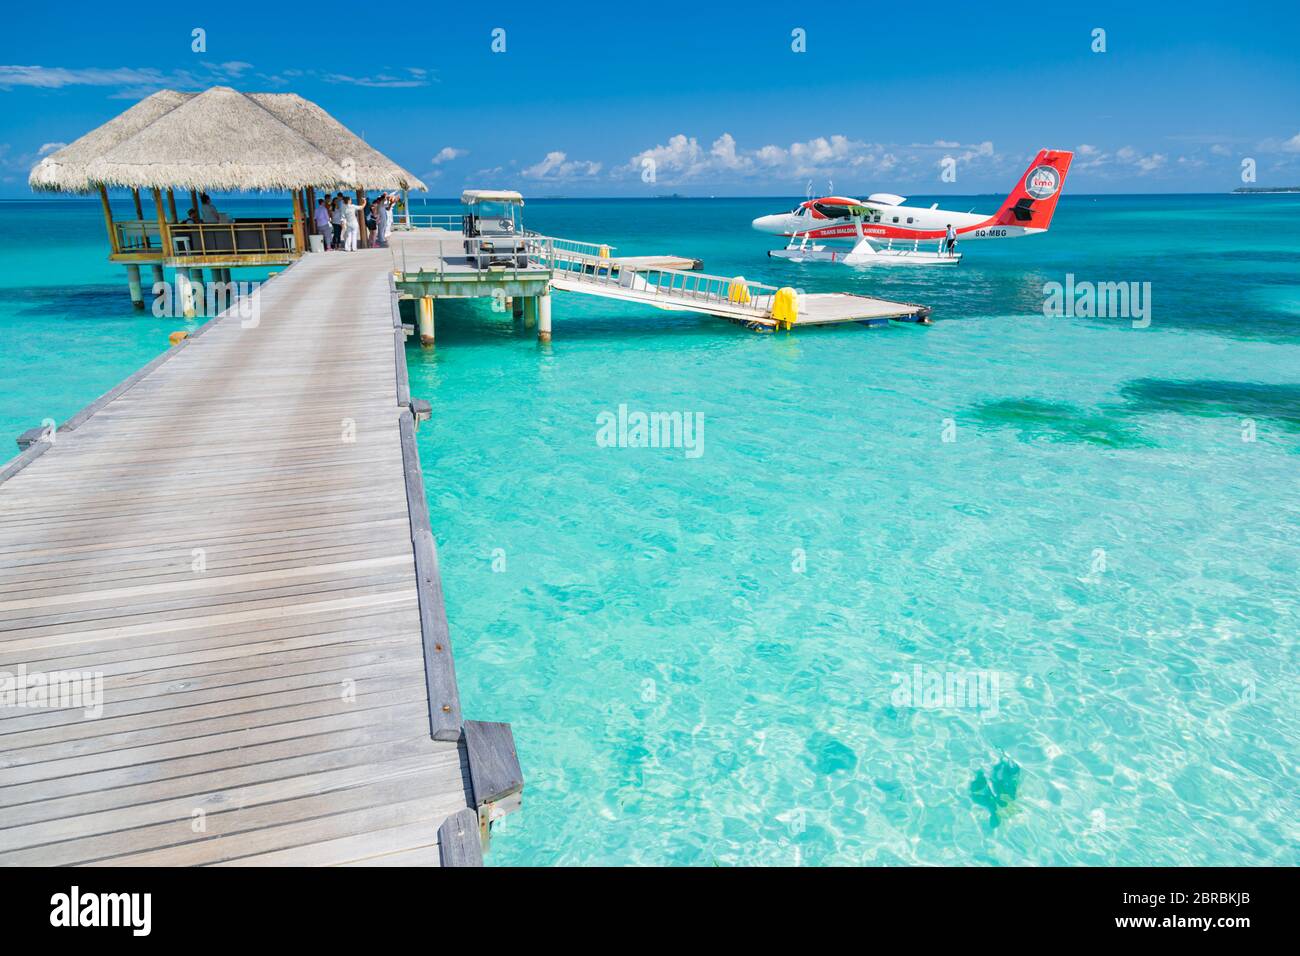 05.19.2019 - Ari Atoll, Maldives: Exotic scene with Trans Maldivian Airways seaplane on Maldives sea landing. Vacation or holiday in Maldives concept Stock Photo